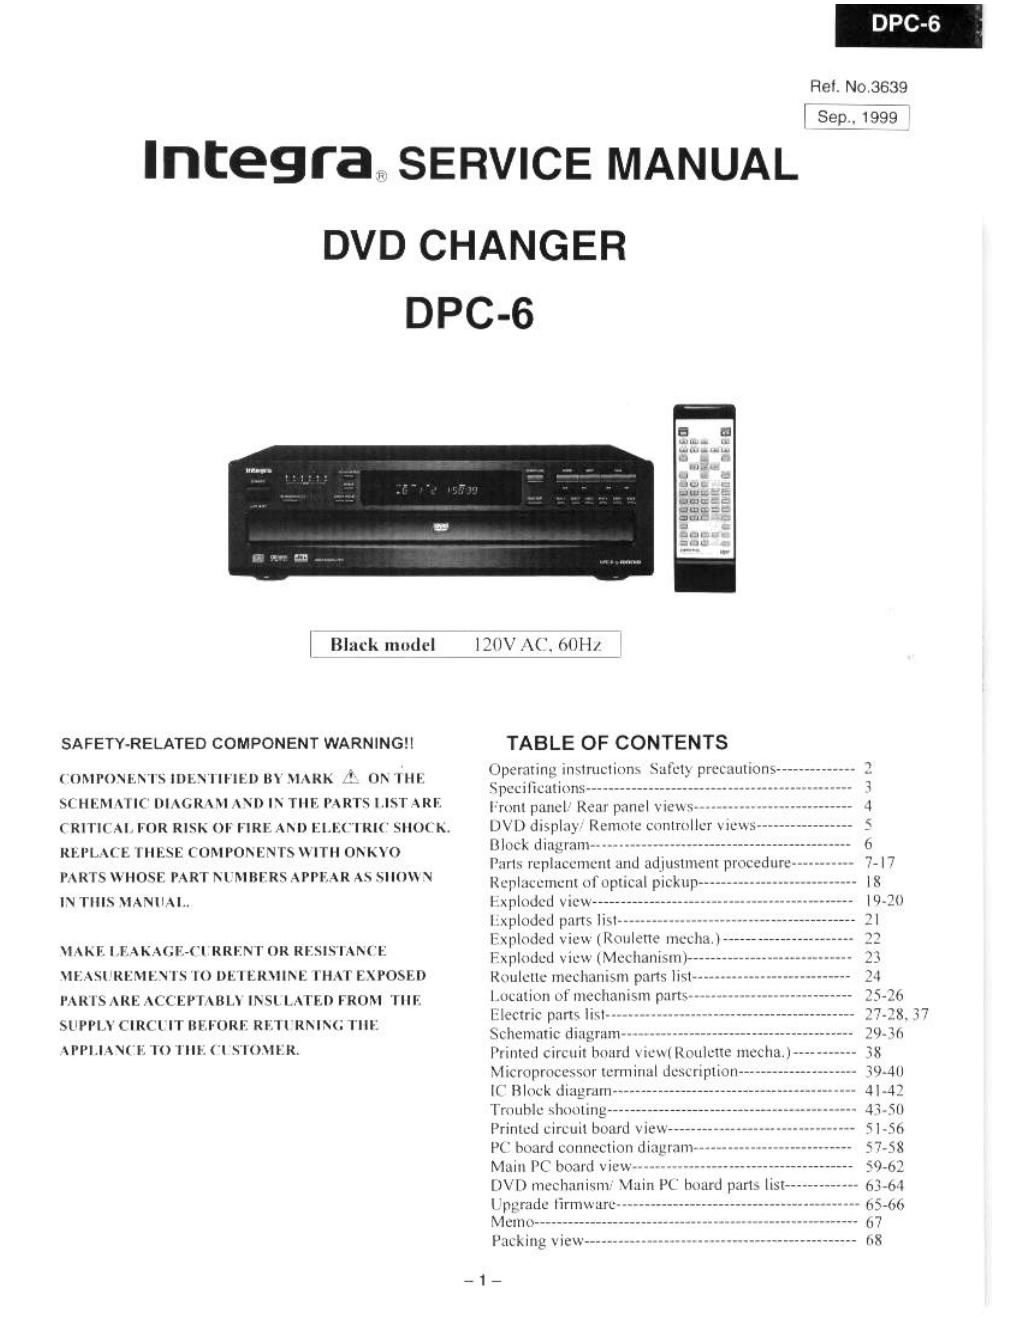 integra dpc 6 service manual